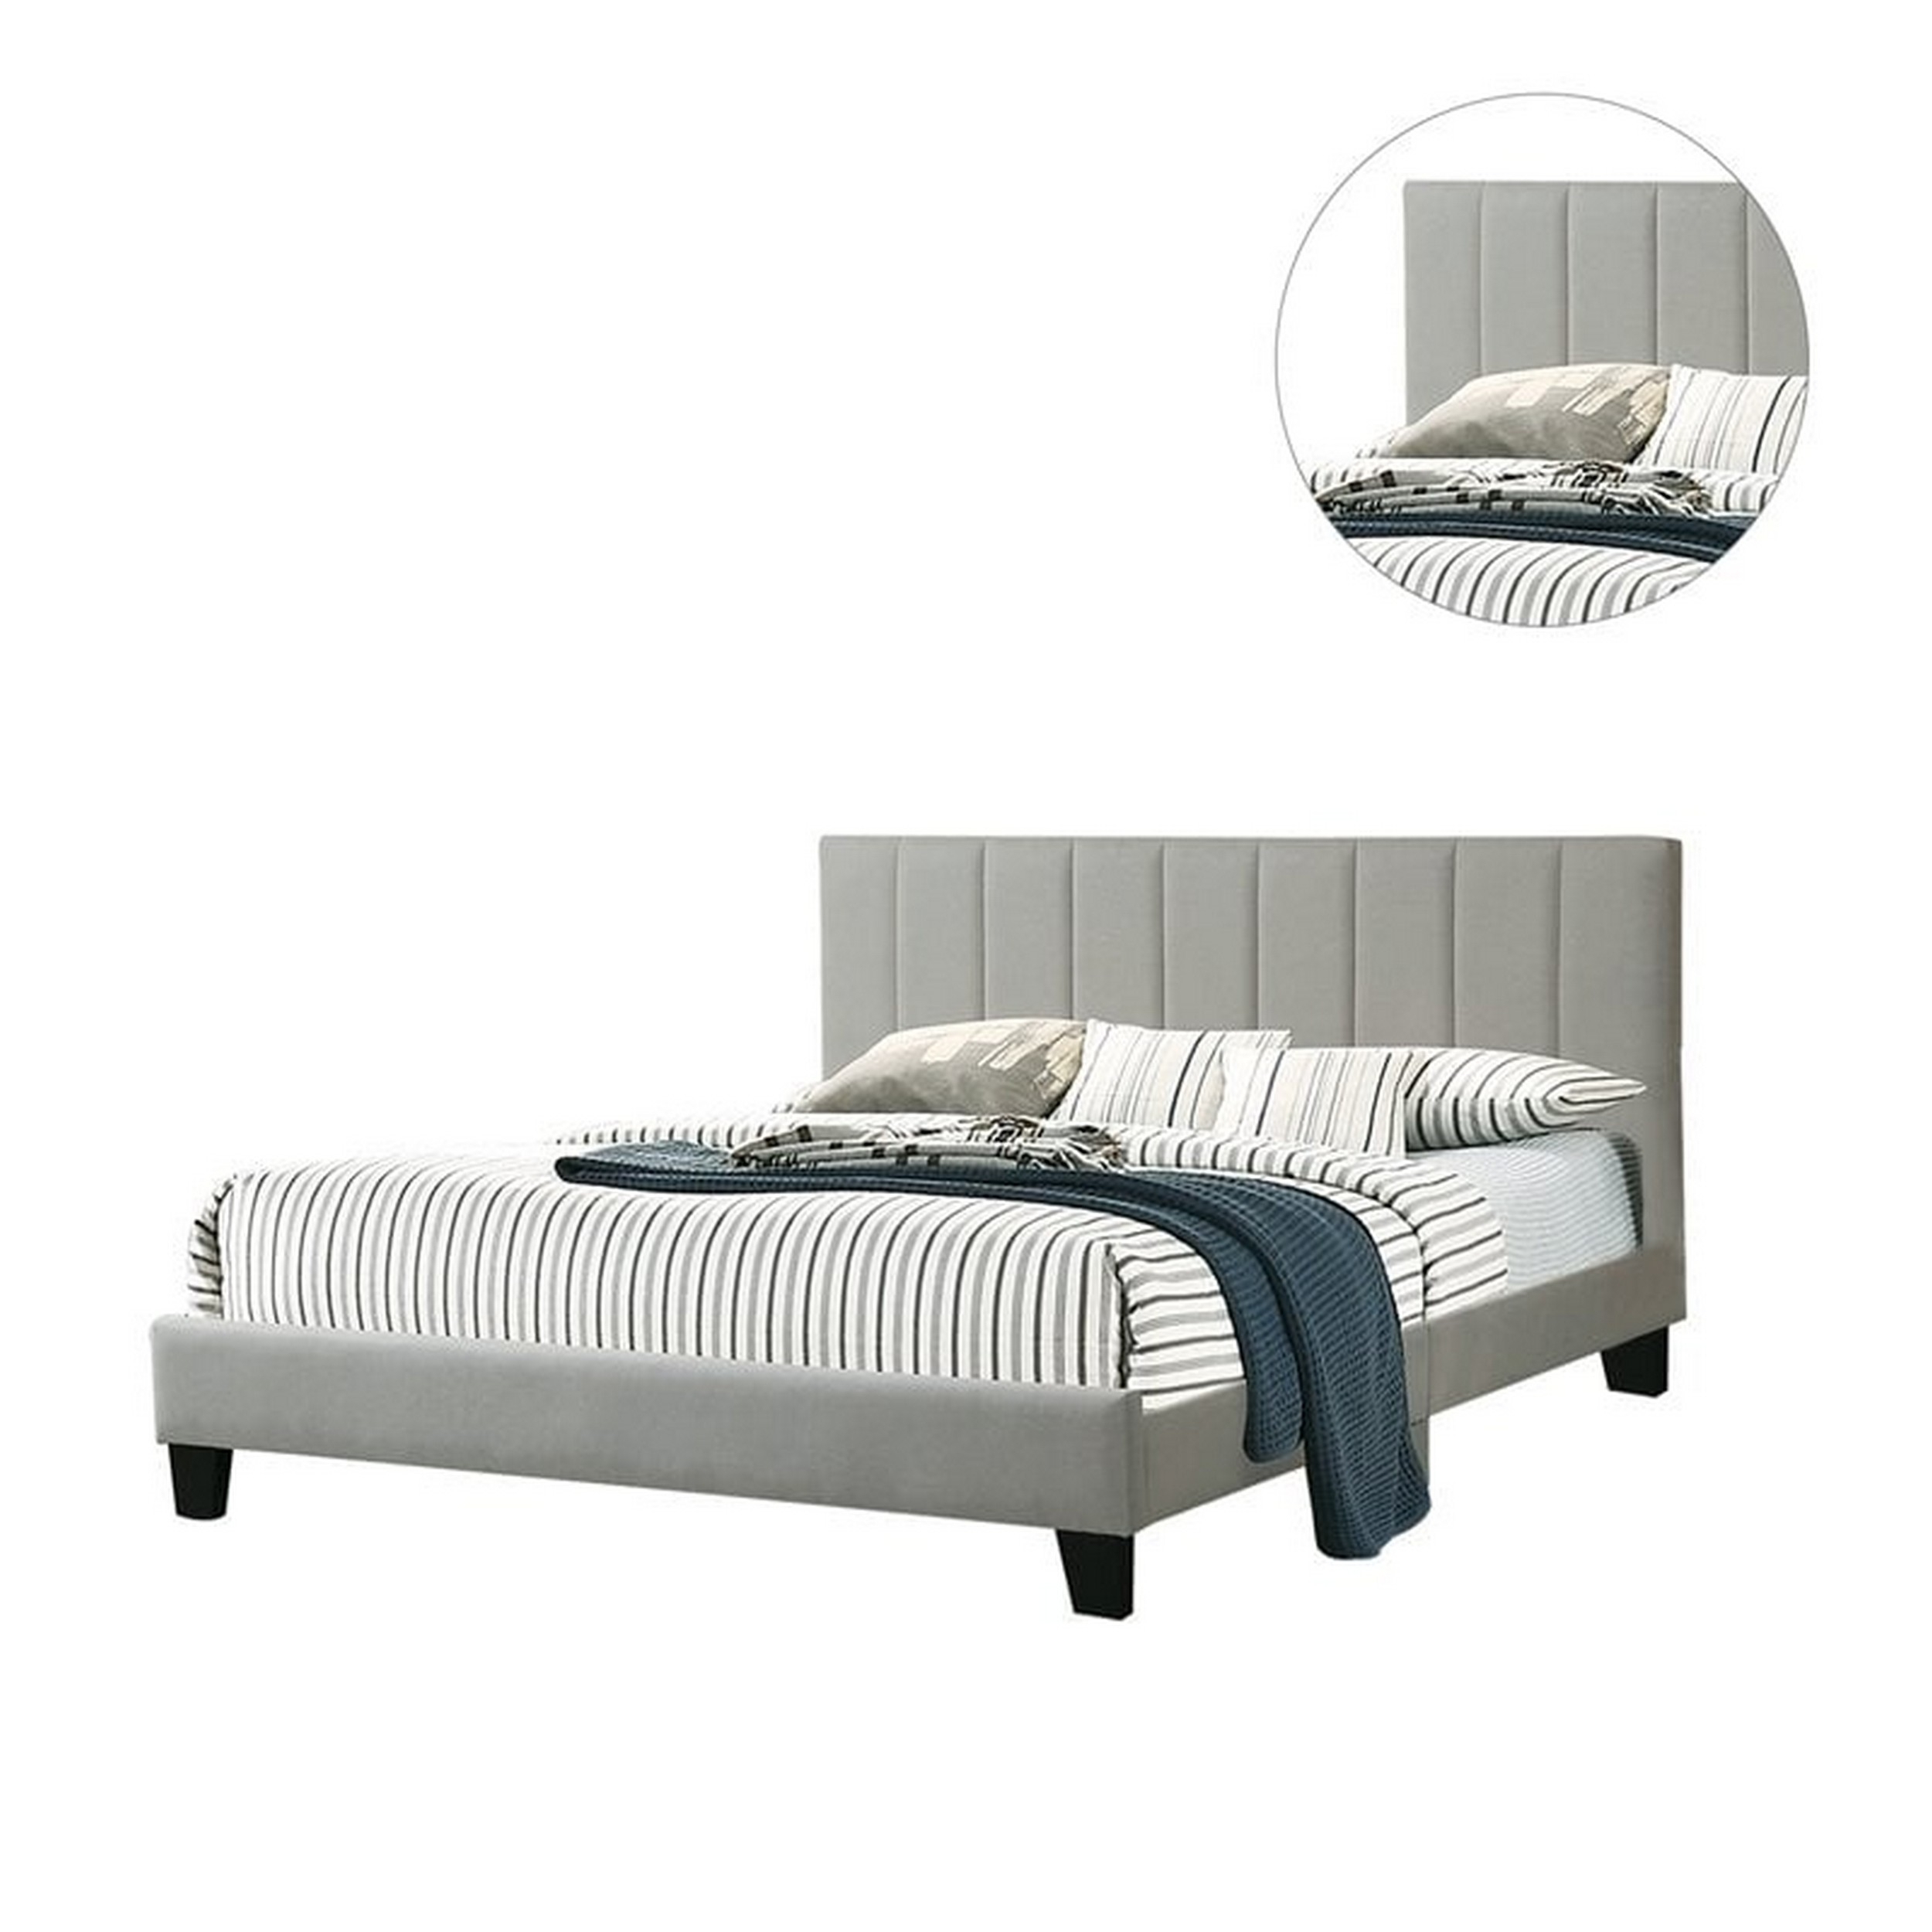 Dex Modern Platform Queen Size Bed, Square Tufted Upholstery, Light Gray- Saltoro Sherpi